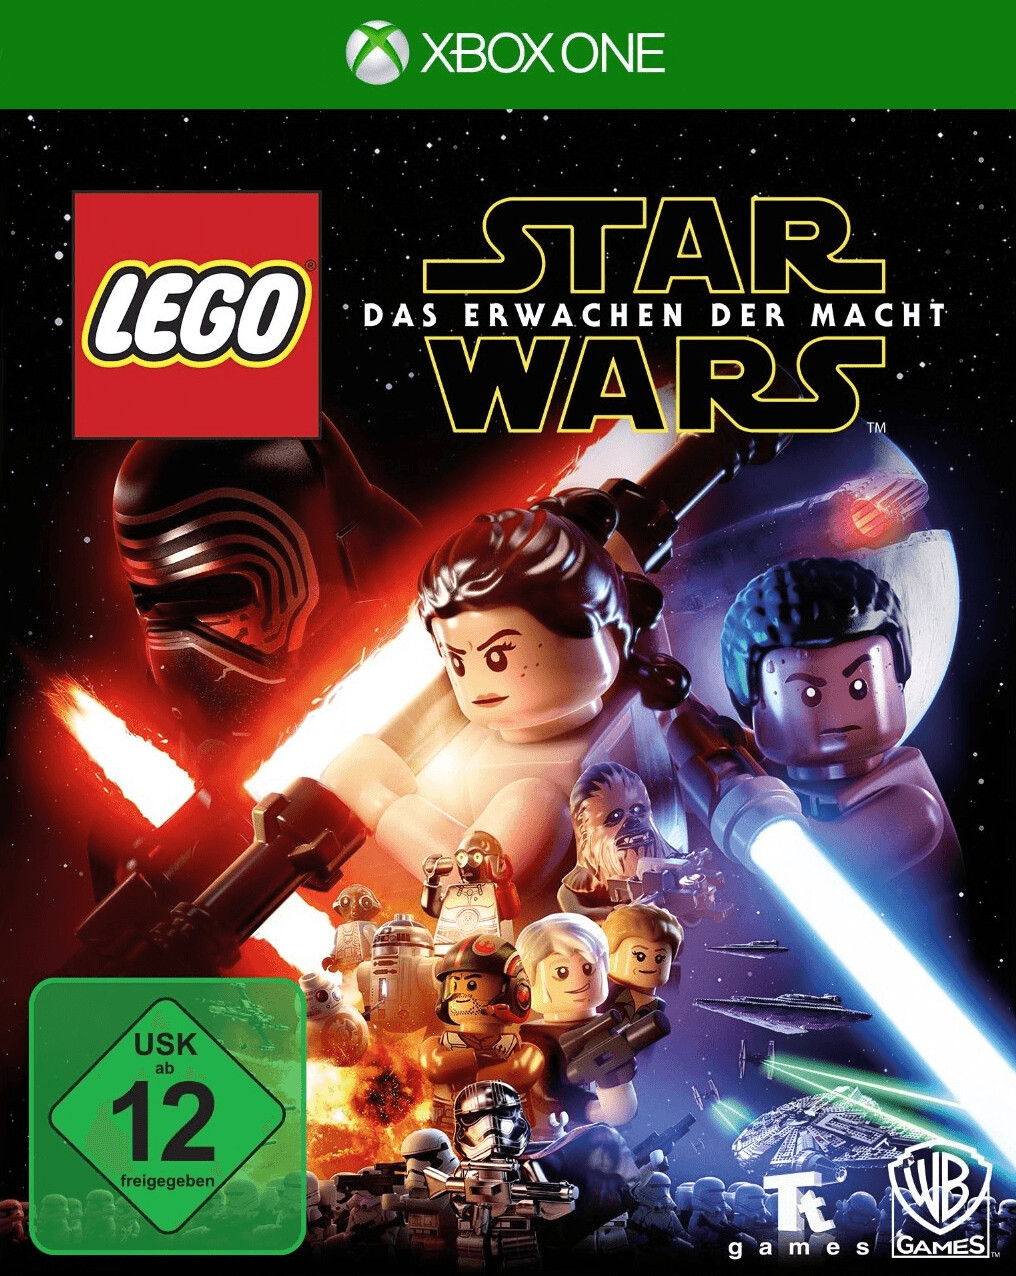 Photos - Game Warner Bros LEGO Star Wars: The Force Awakens (Xbox One)